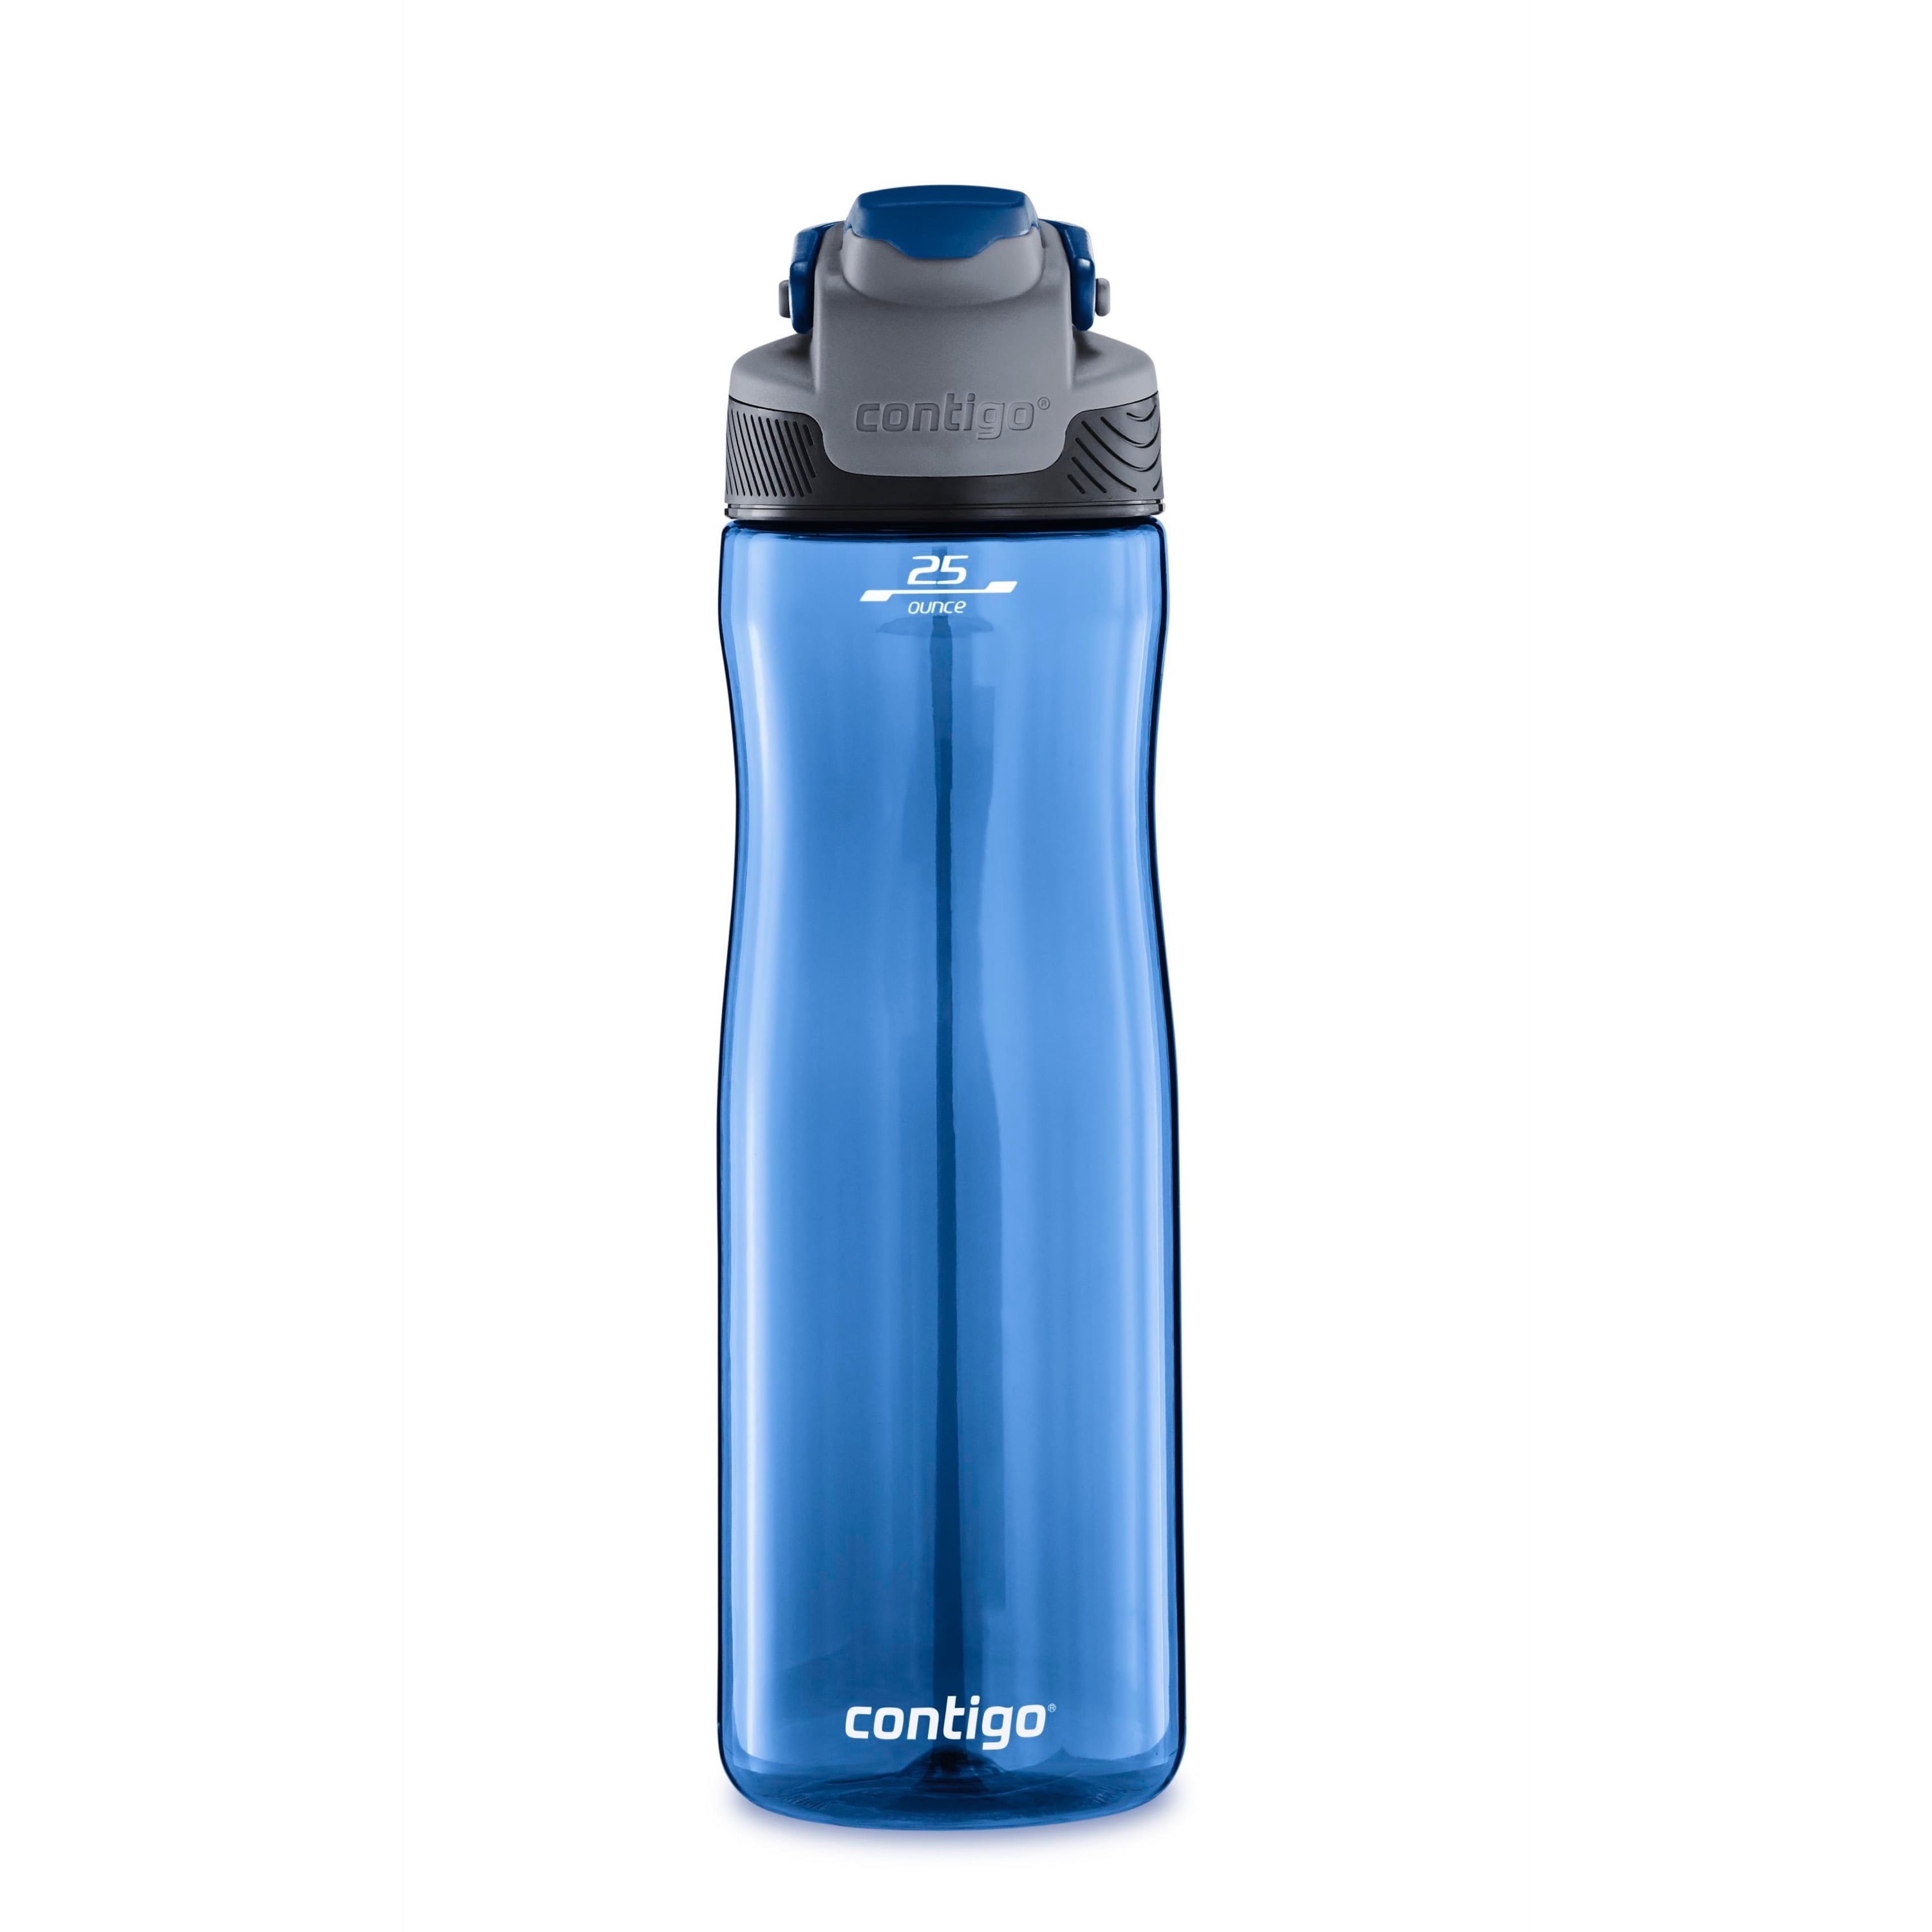 Details about   Contigo Auto Seal Fit 25oz Spill Proof Water Bottle Sangria 